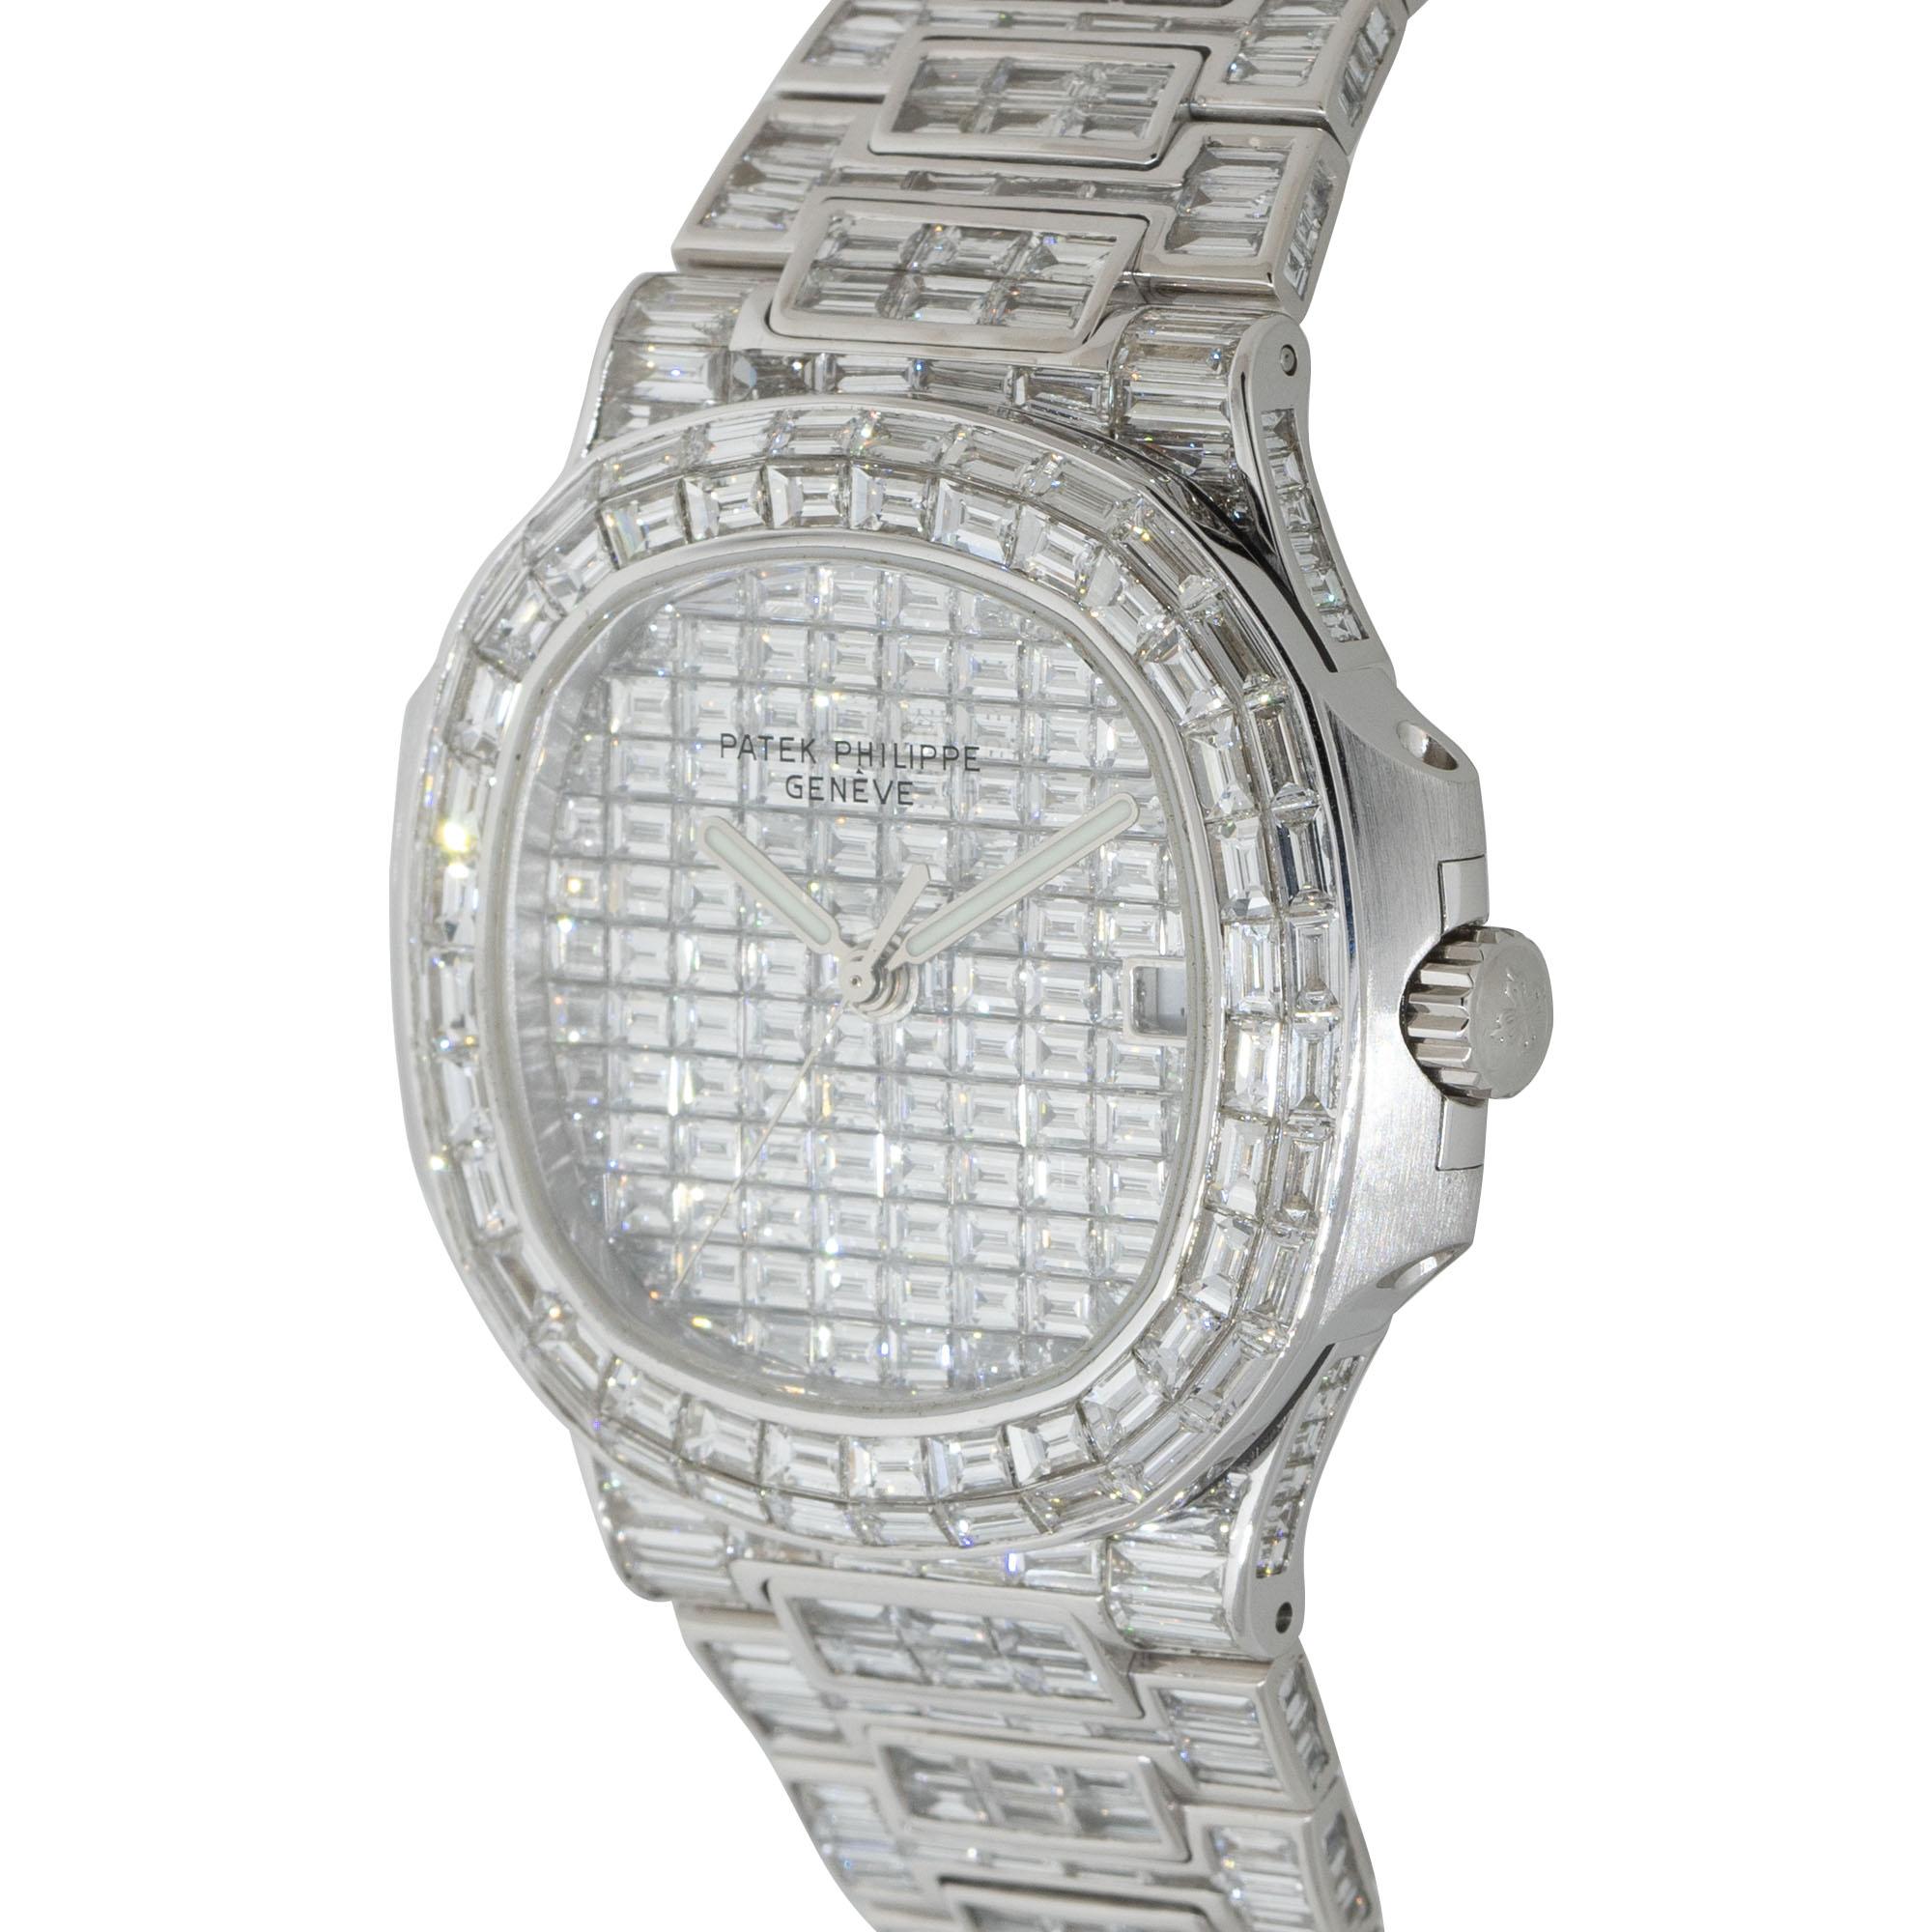 Baguette Cut Patek Philippe 5711 18k White Gold All Diamond Pave Watch